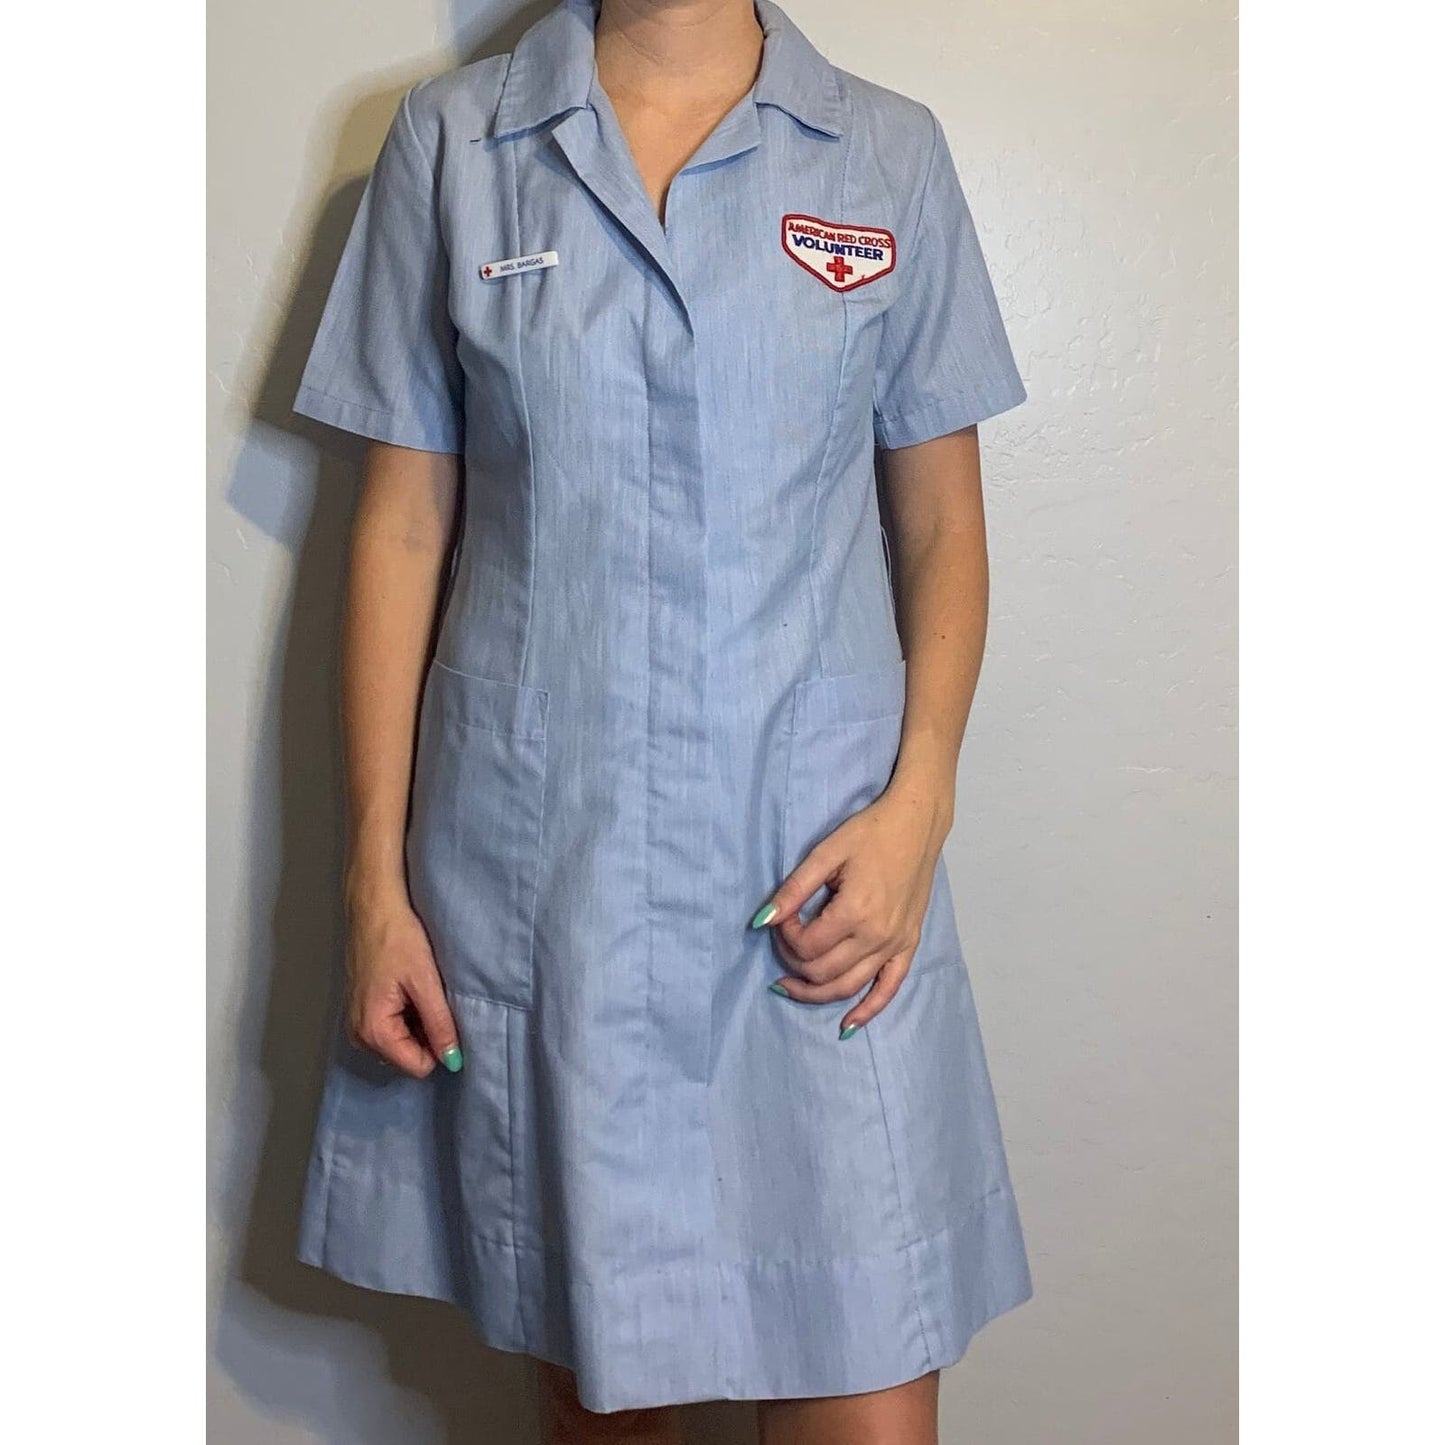 Vintage 1960s American Red Cross Nurse's Dress